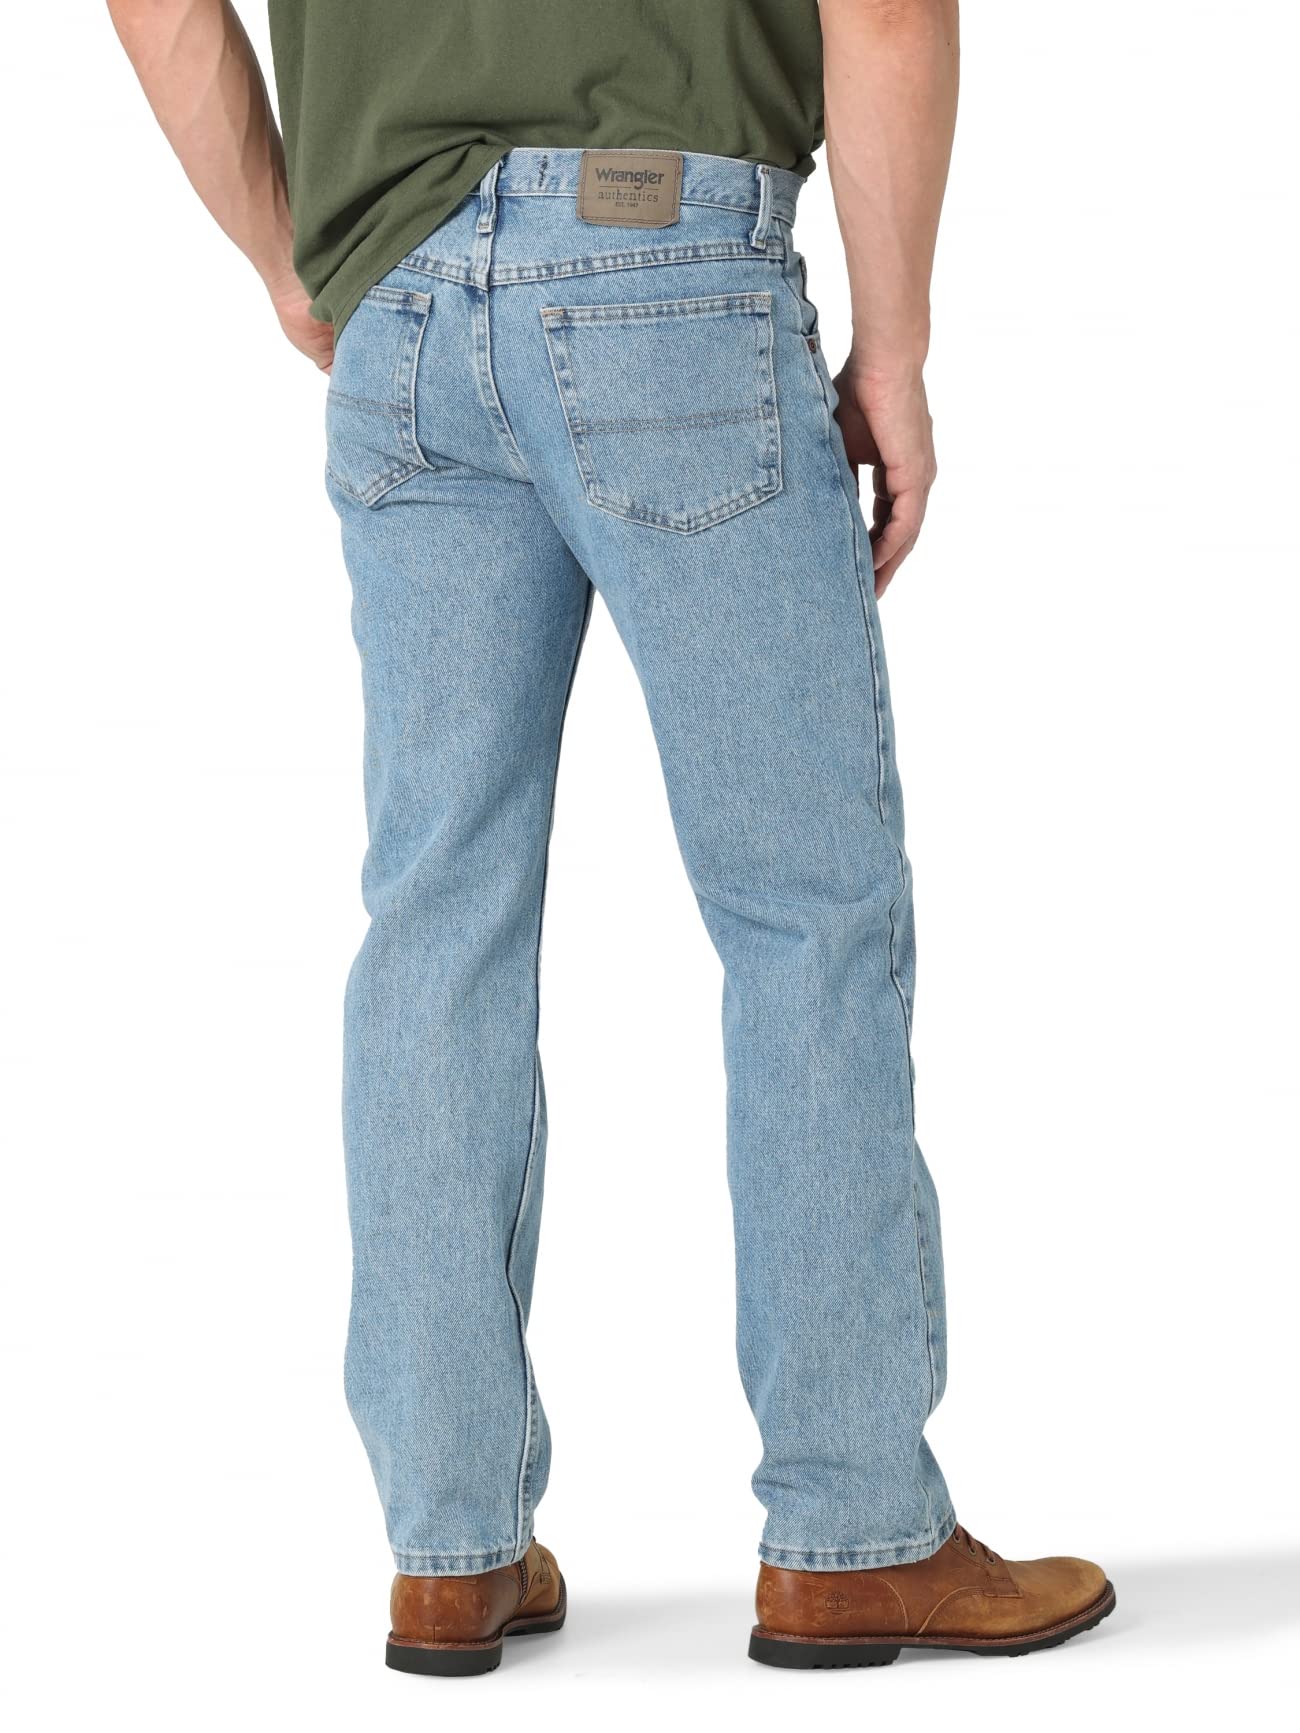 Wrangler Authentics Men's Classic 5-Pocket Regular Fit Cotton Jean, Light Stonewash, 35W x 36L